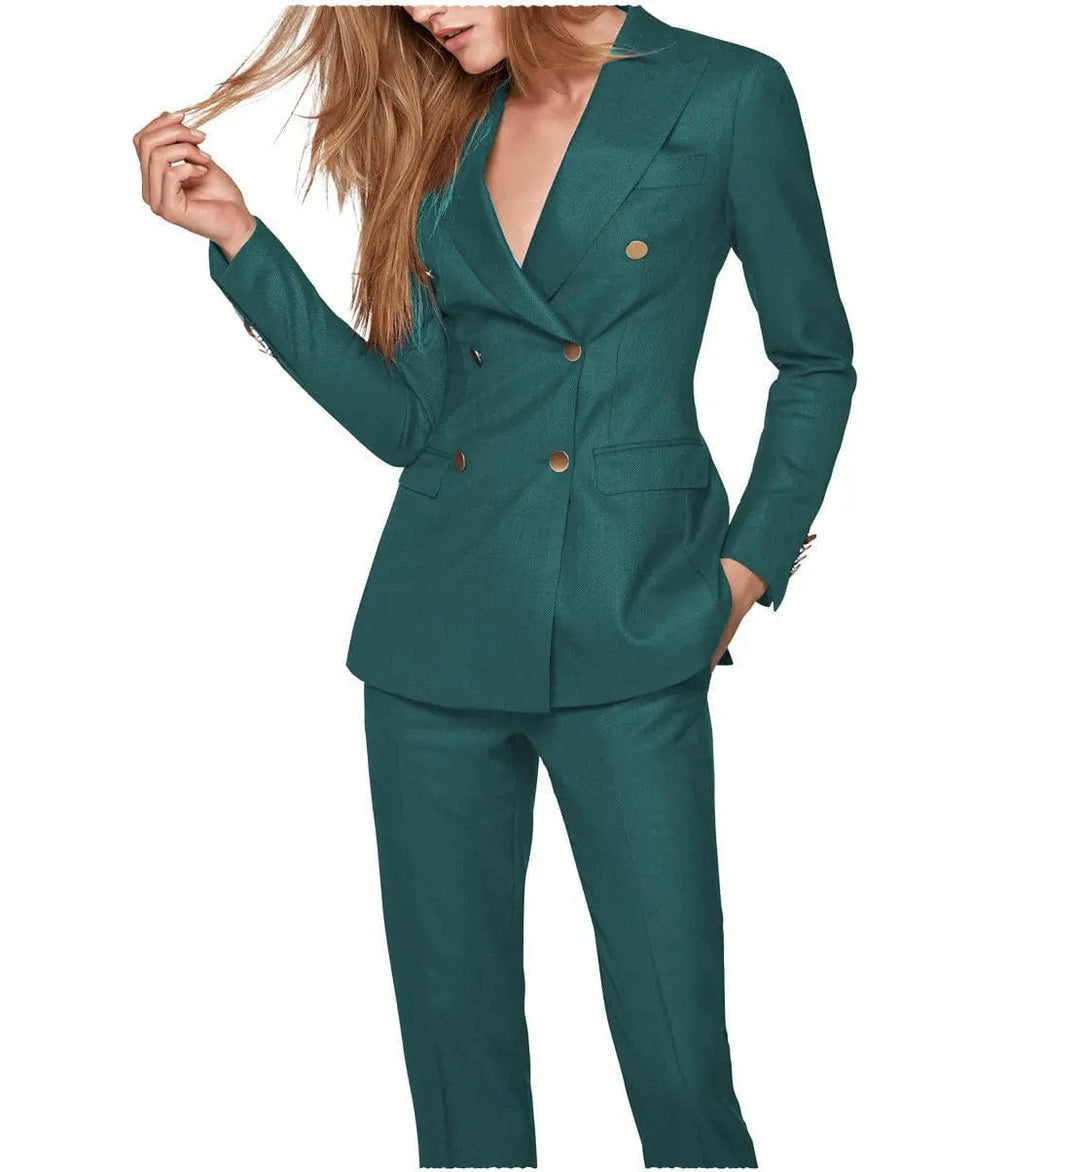 solovedress Formal Flat 2 Pieces Women Suit Peak Lapel Blazer